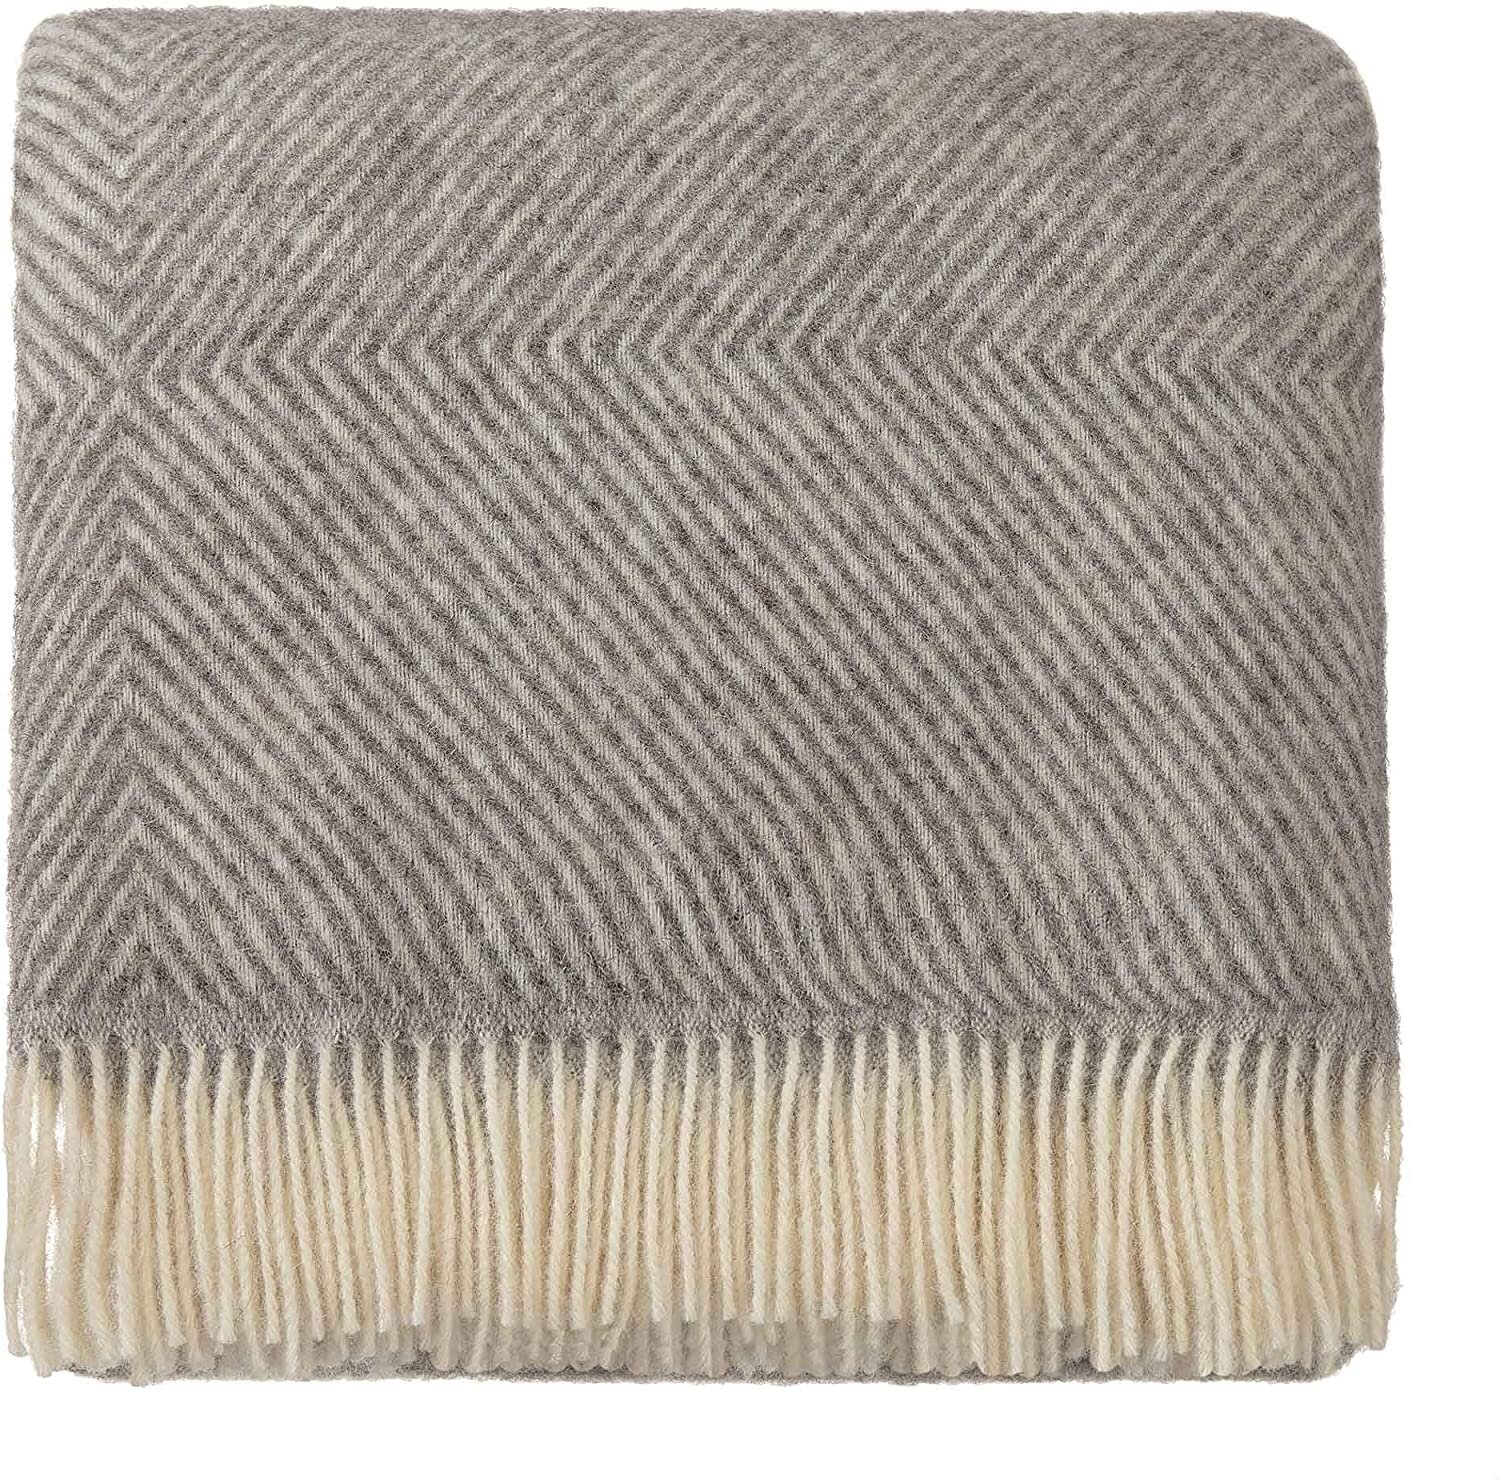 Gray/Cream Wool Throw Blanket